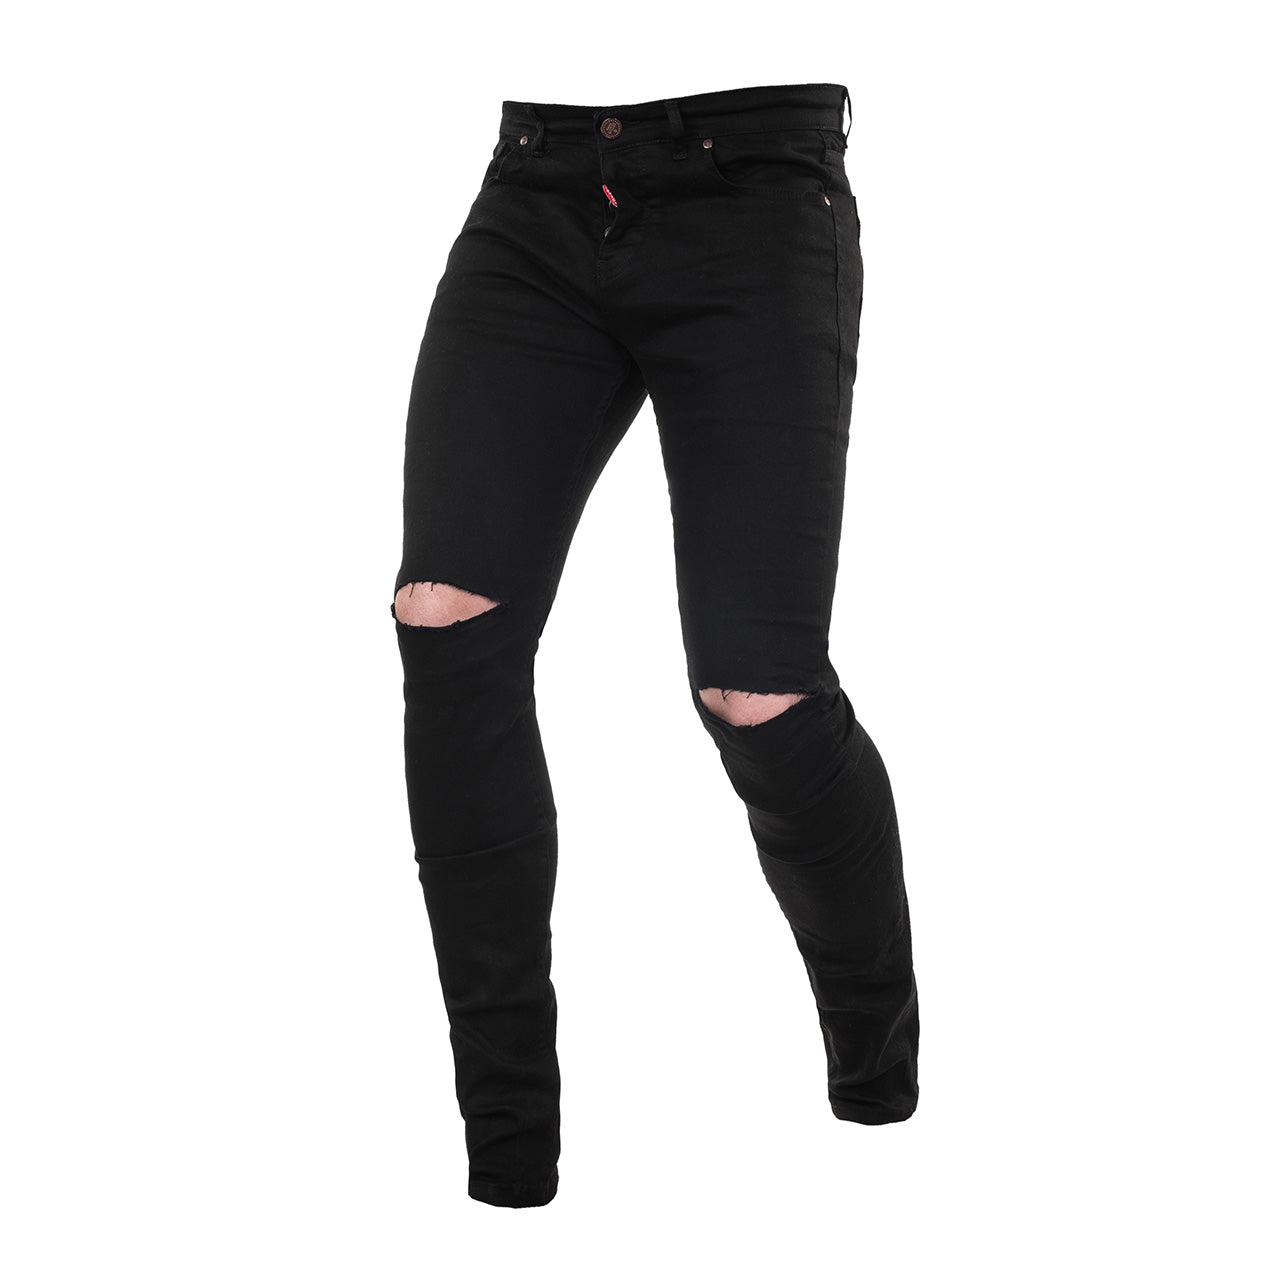 Jeans Μαύρο με Σκισίματα στα Γόνατα (115) - Panda Clothing